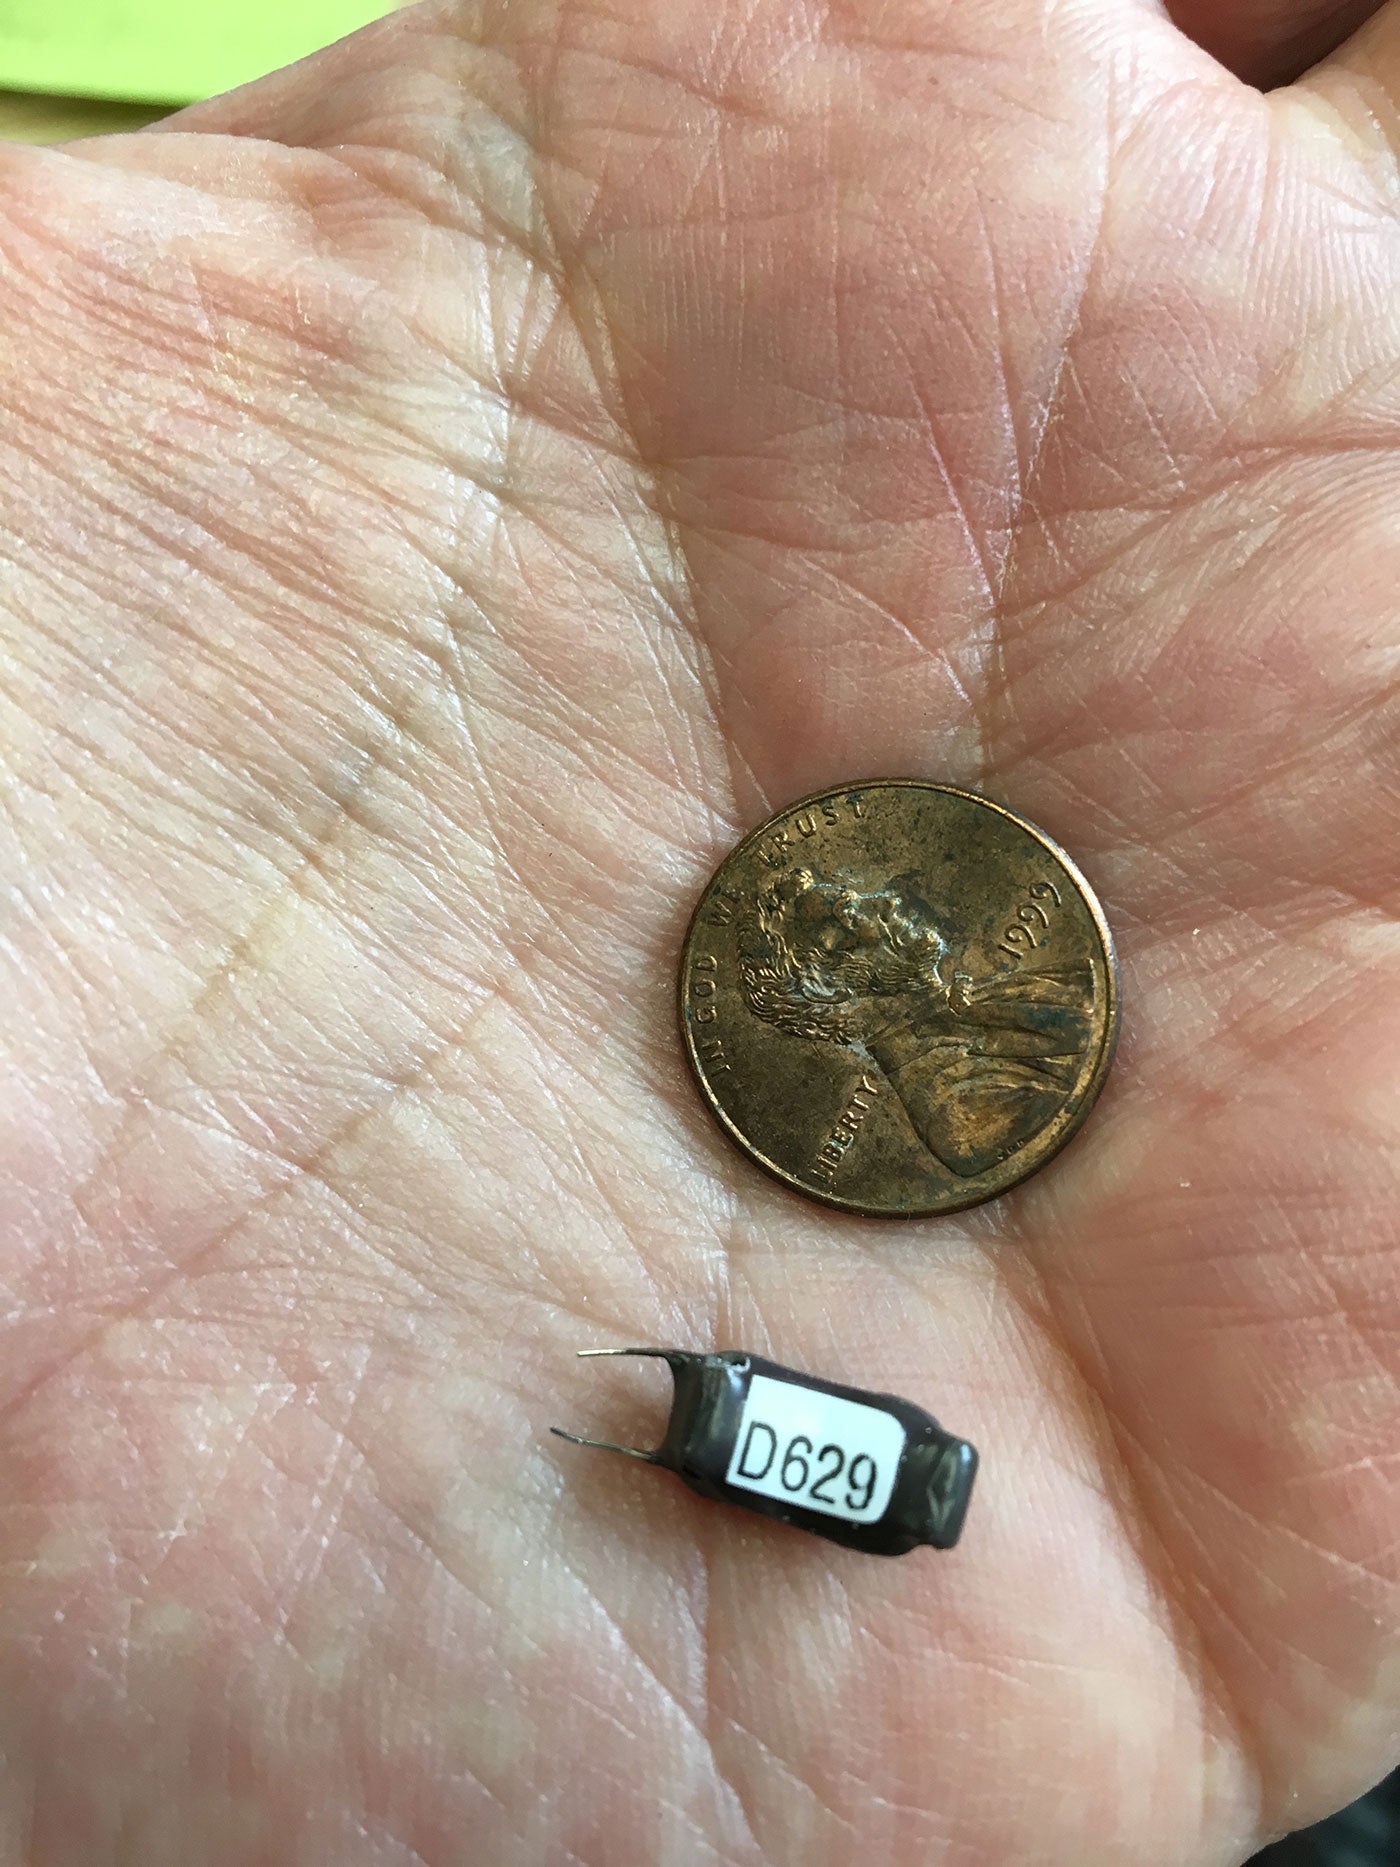 tiny transmitter next to a larger penny